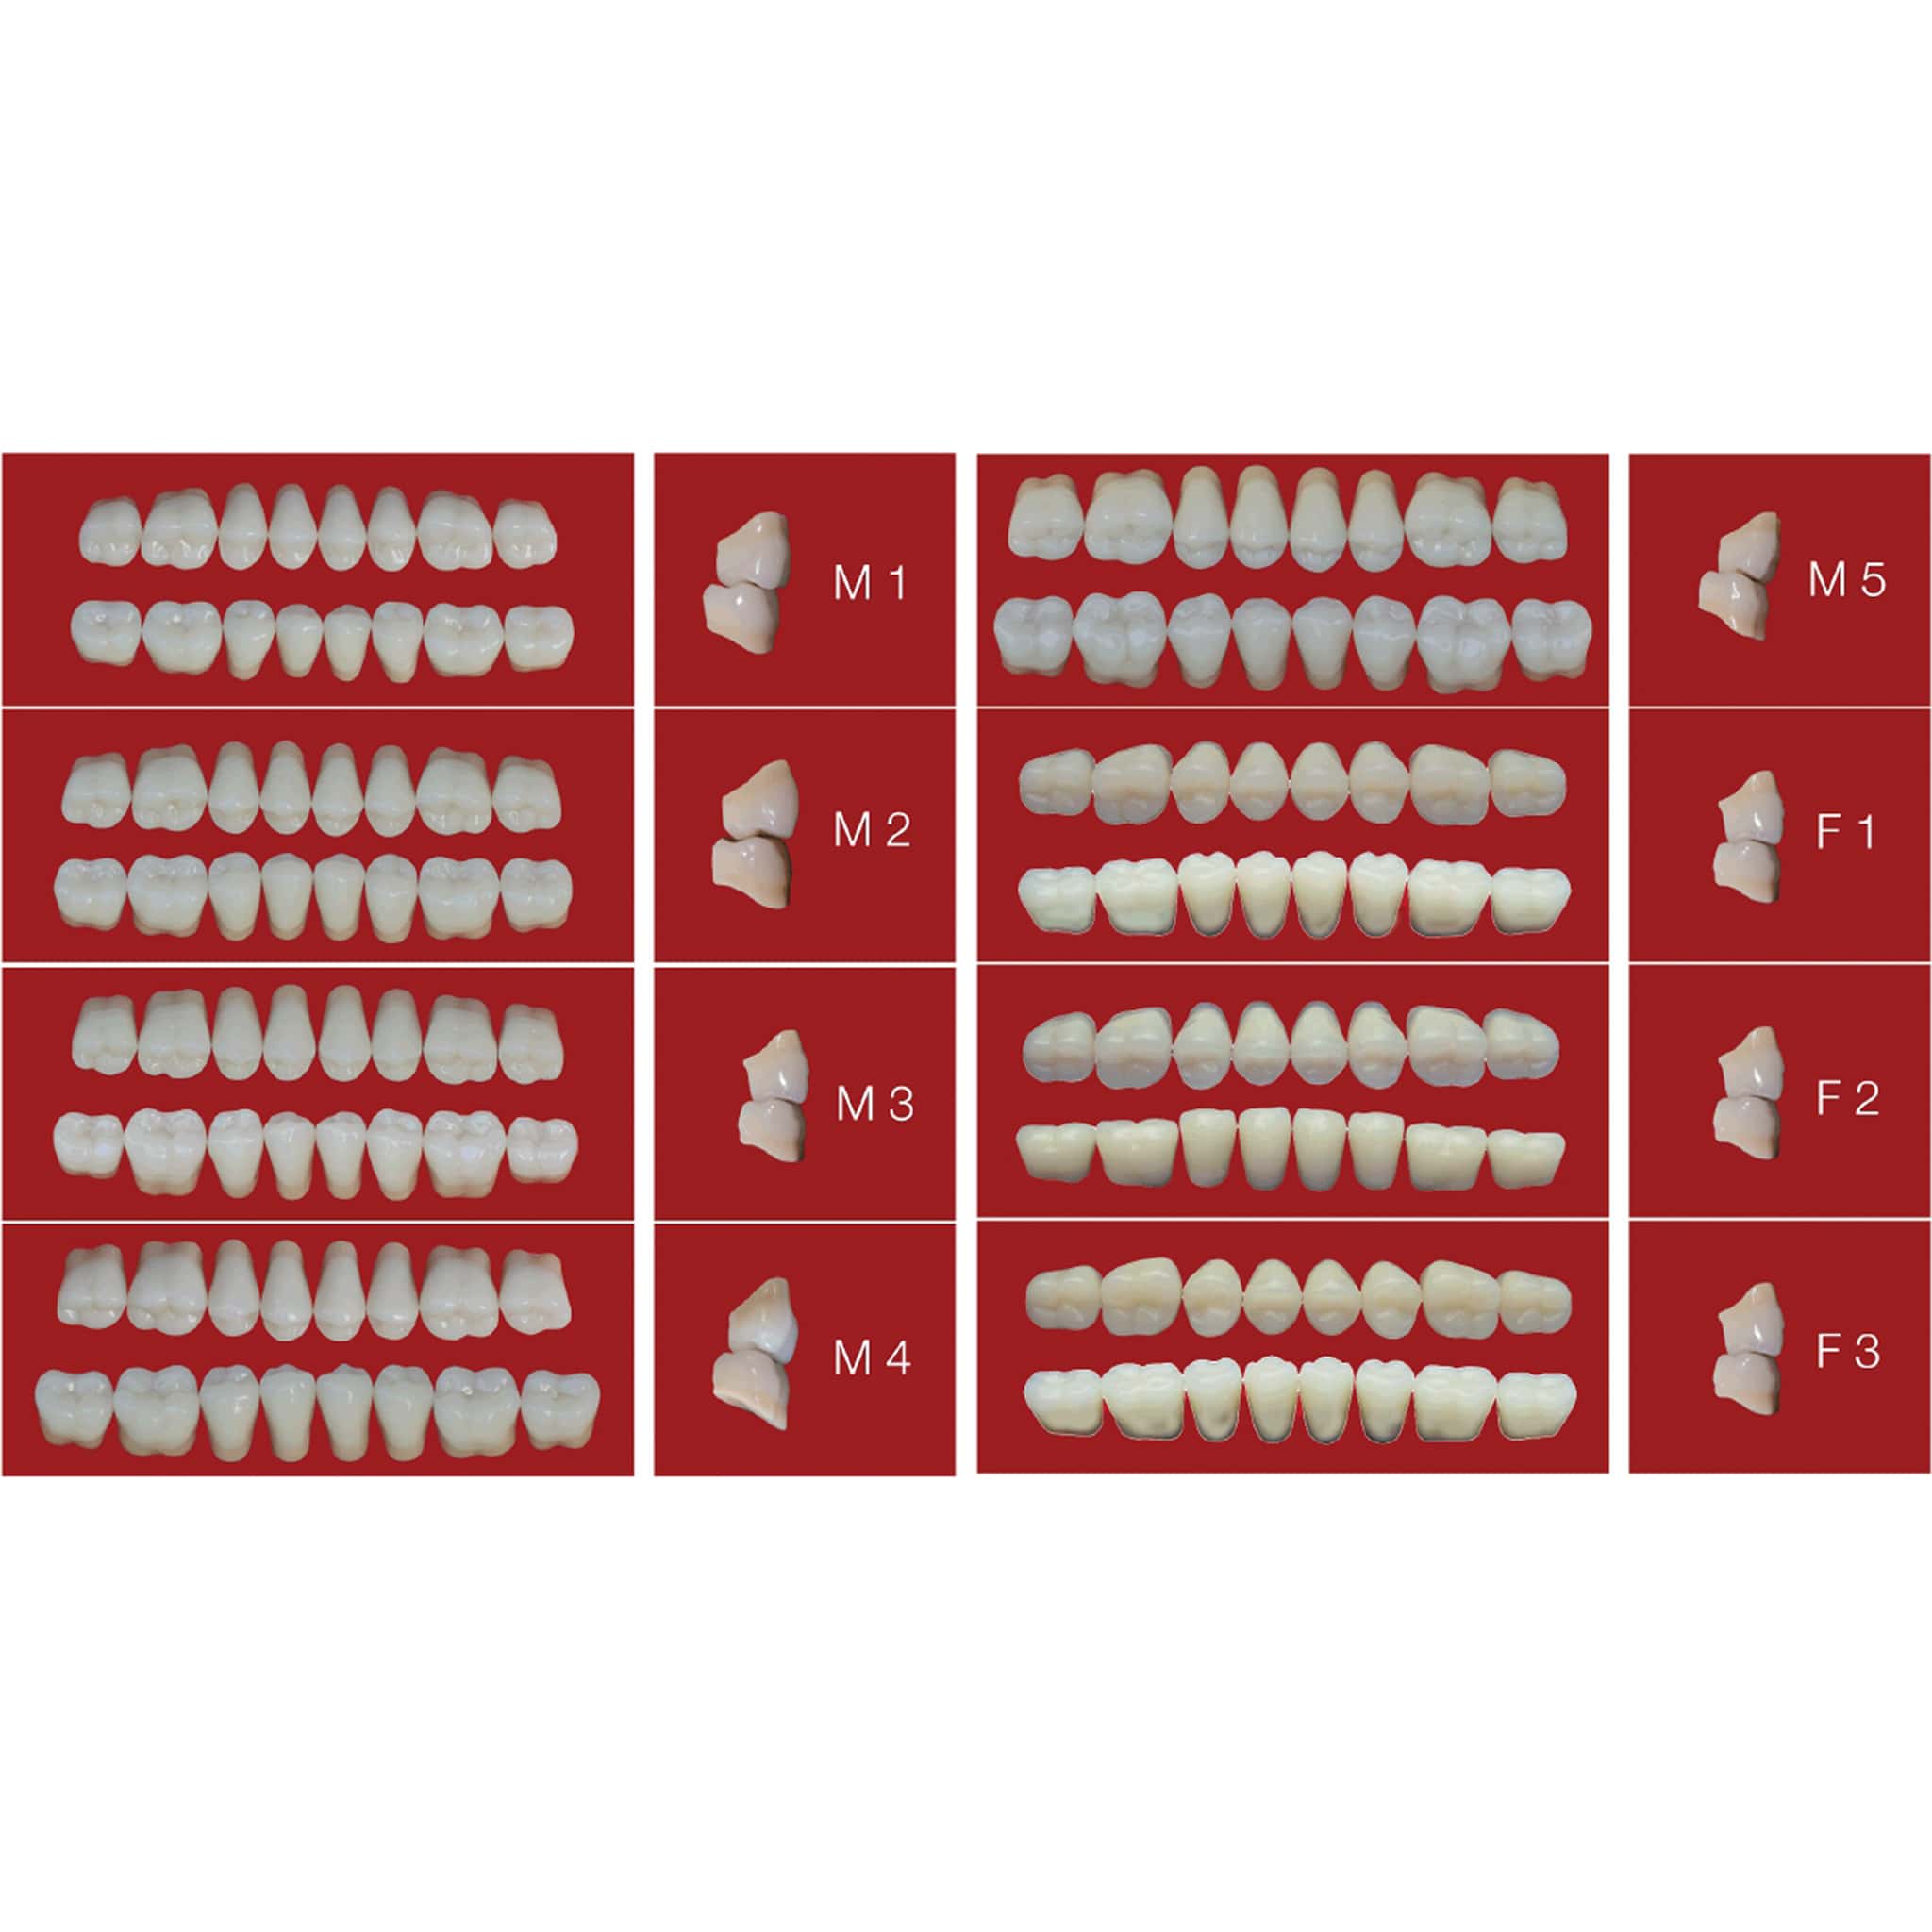 MR Dental Medi-Lux Full Set B3 Shade (Box of 4)